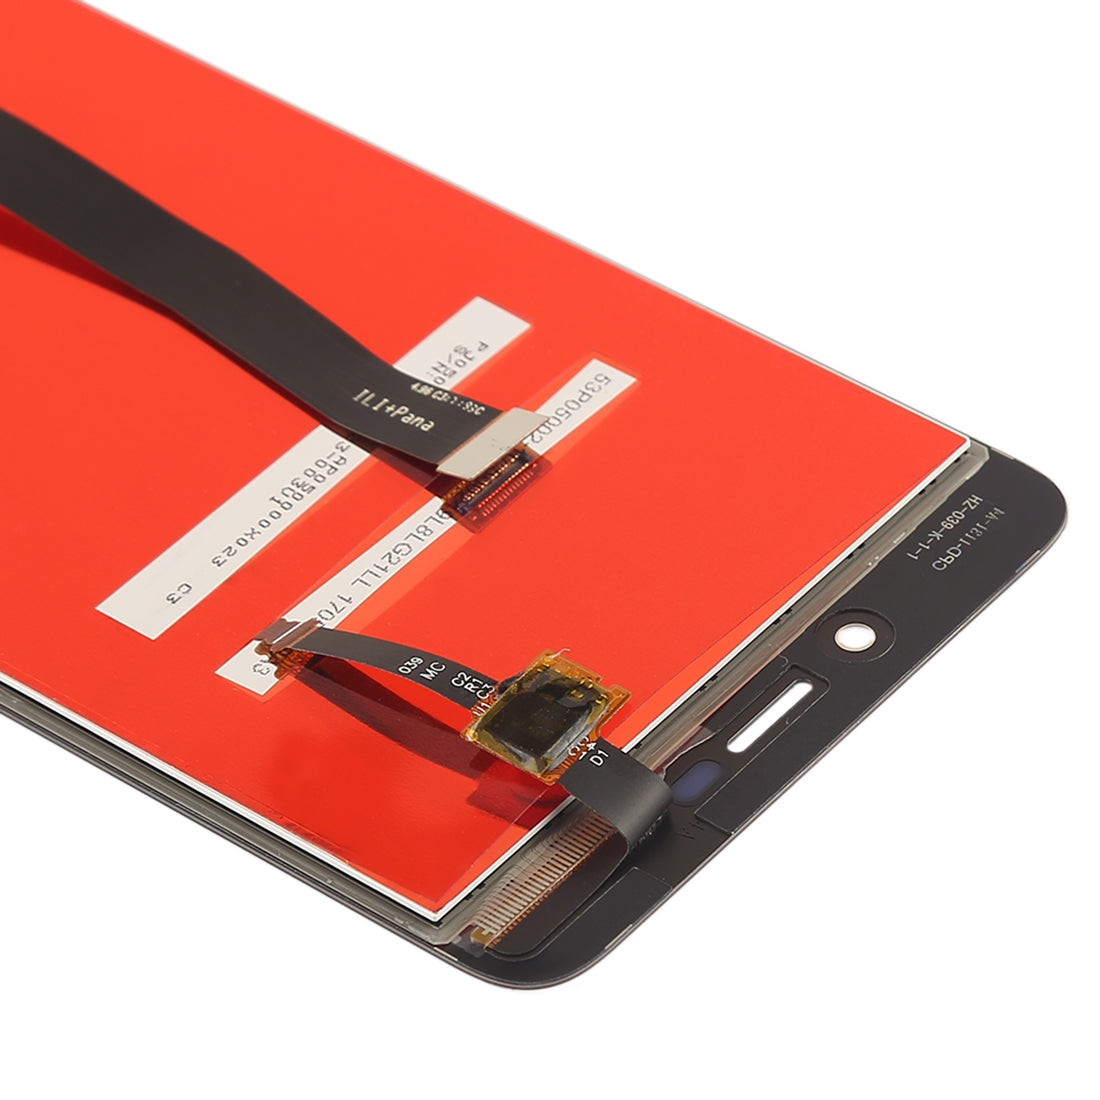 Ecran LCD + Numériseur Tactile Xiaomi Redmi 4A Noir